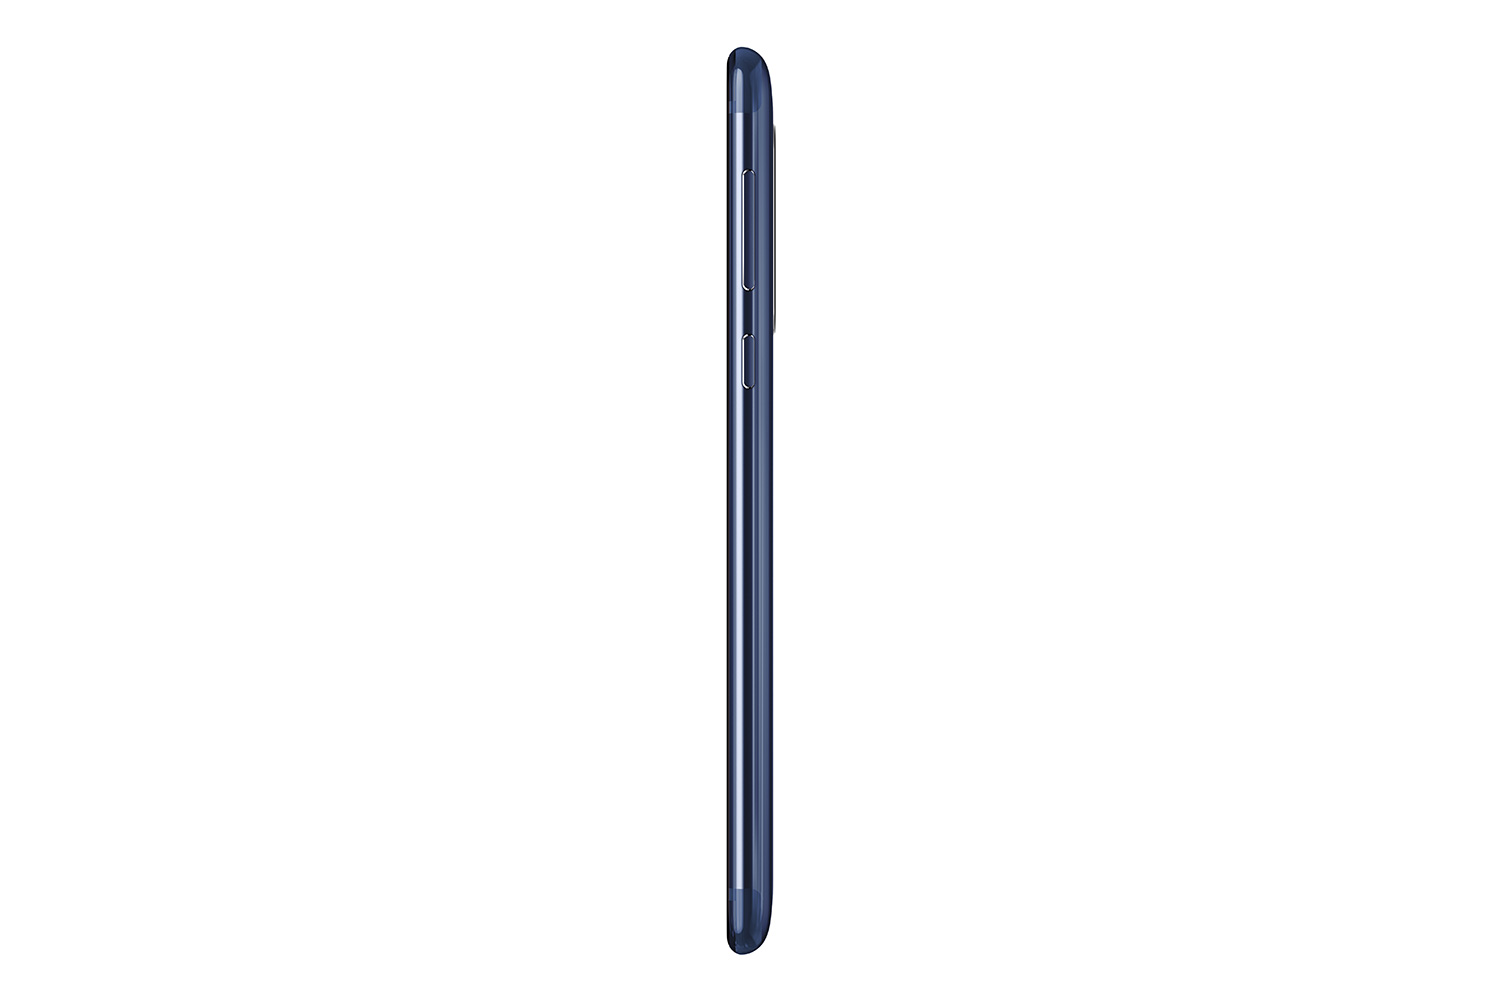 Nokia 8 polished blue right profile